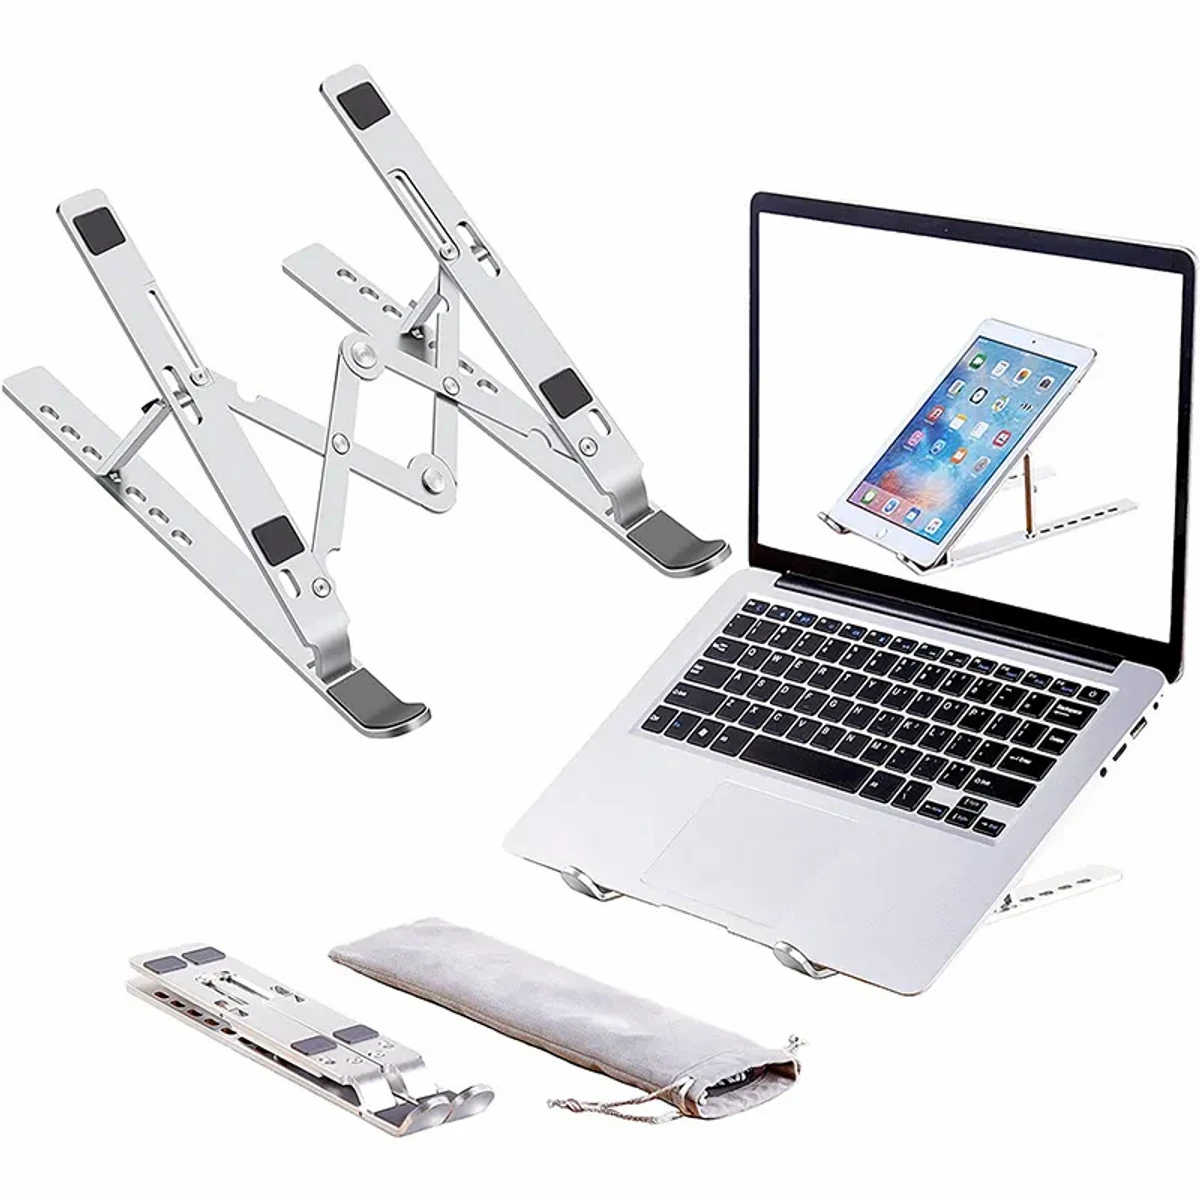 Laptop stand aluminum alloy adjustable multi-angle laptop stand 10-17 inch tablet notebook laptop stand